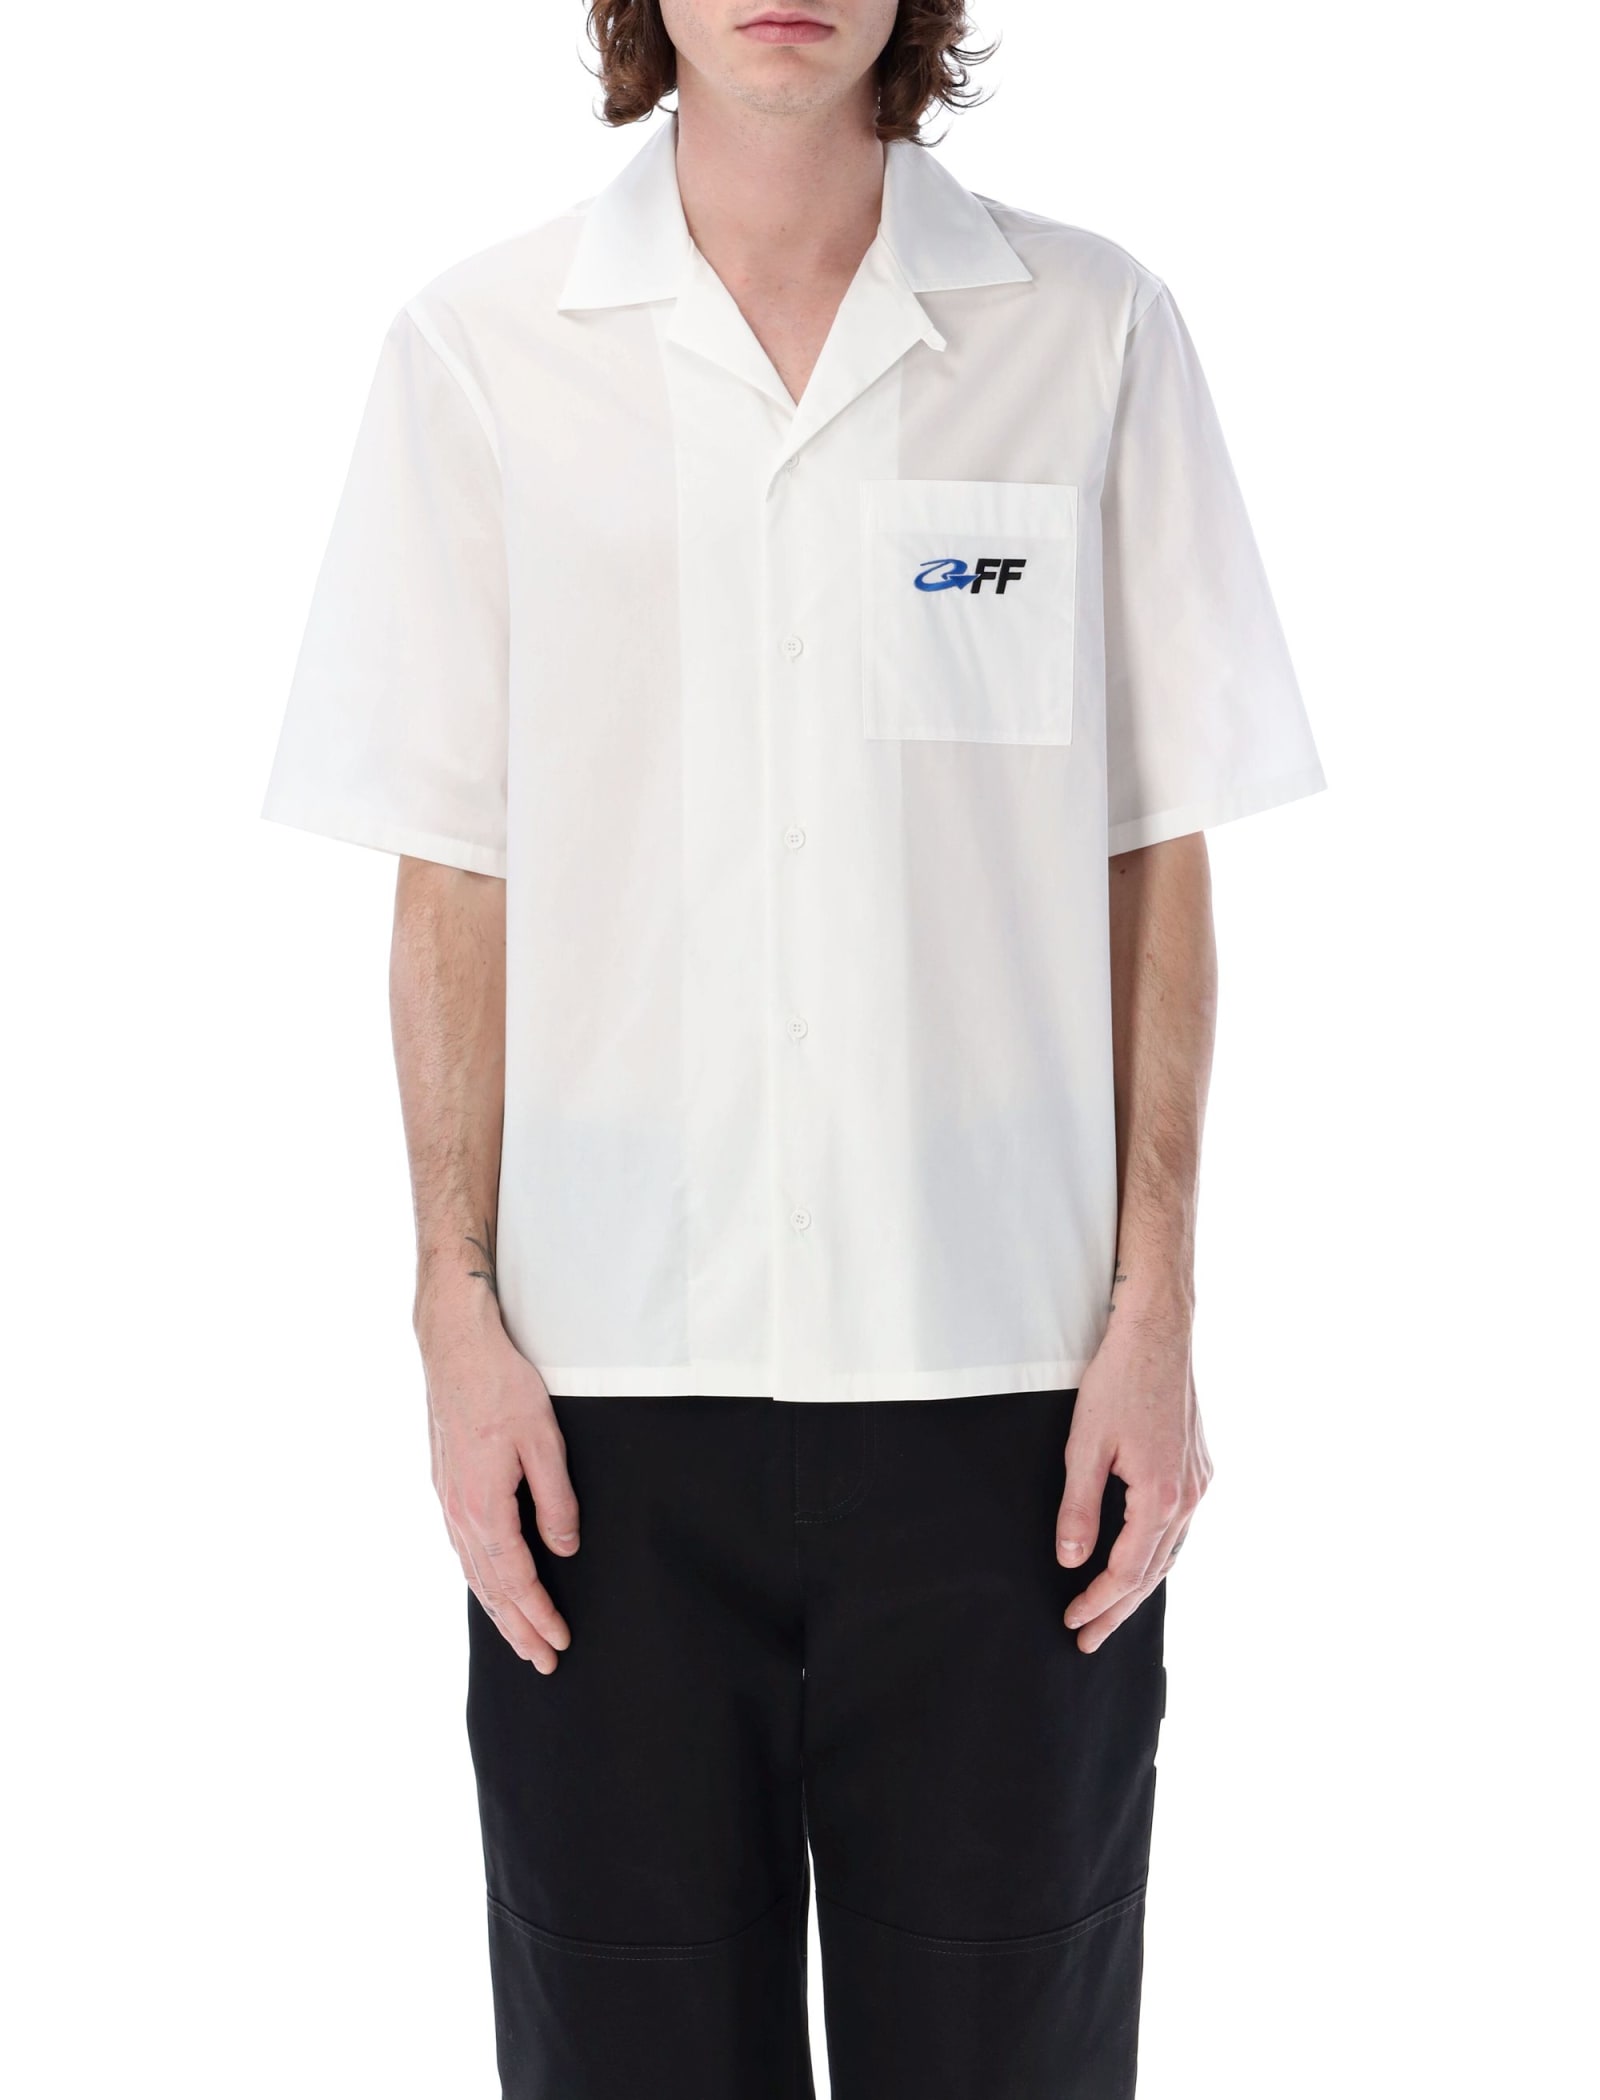 Off-White Exact Opp-print short-sleeved Shirt - Farfetch